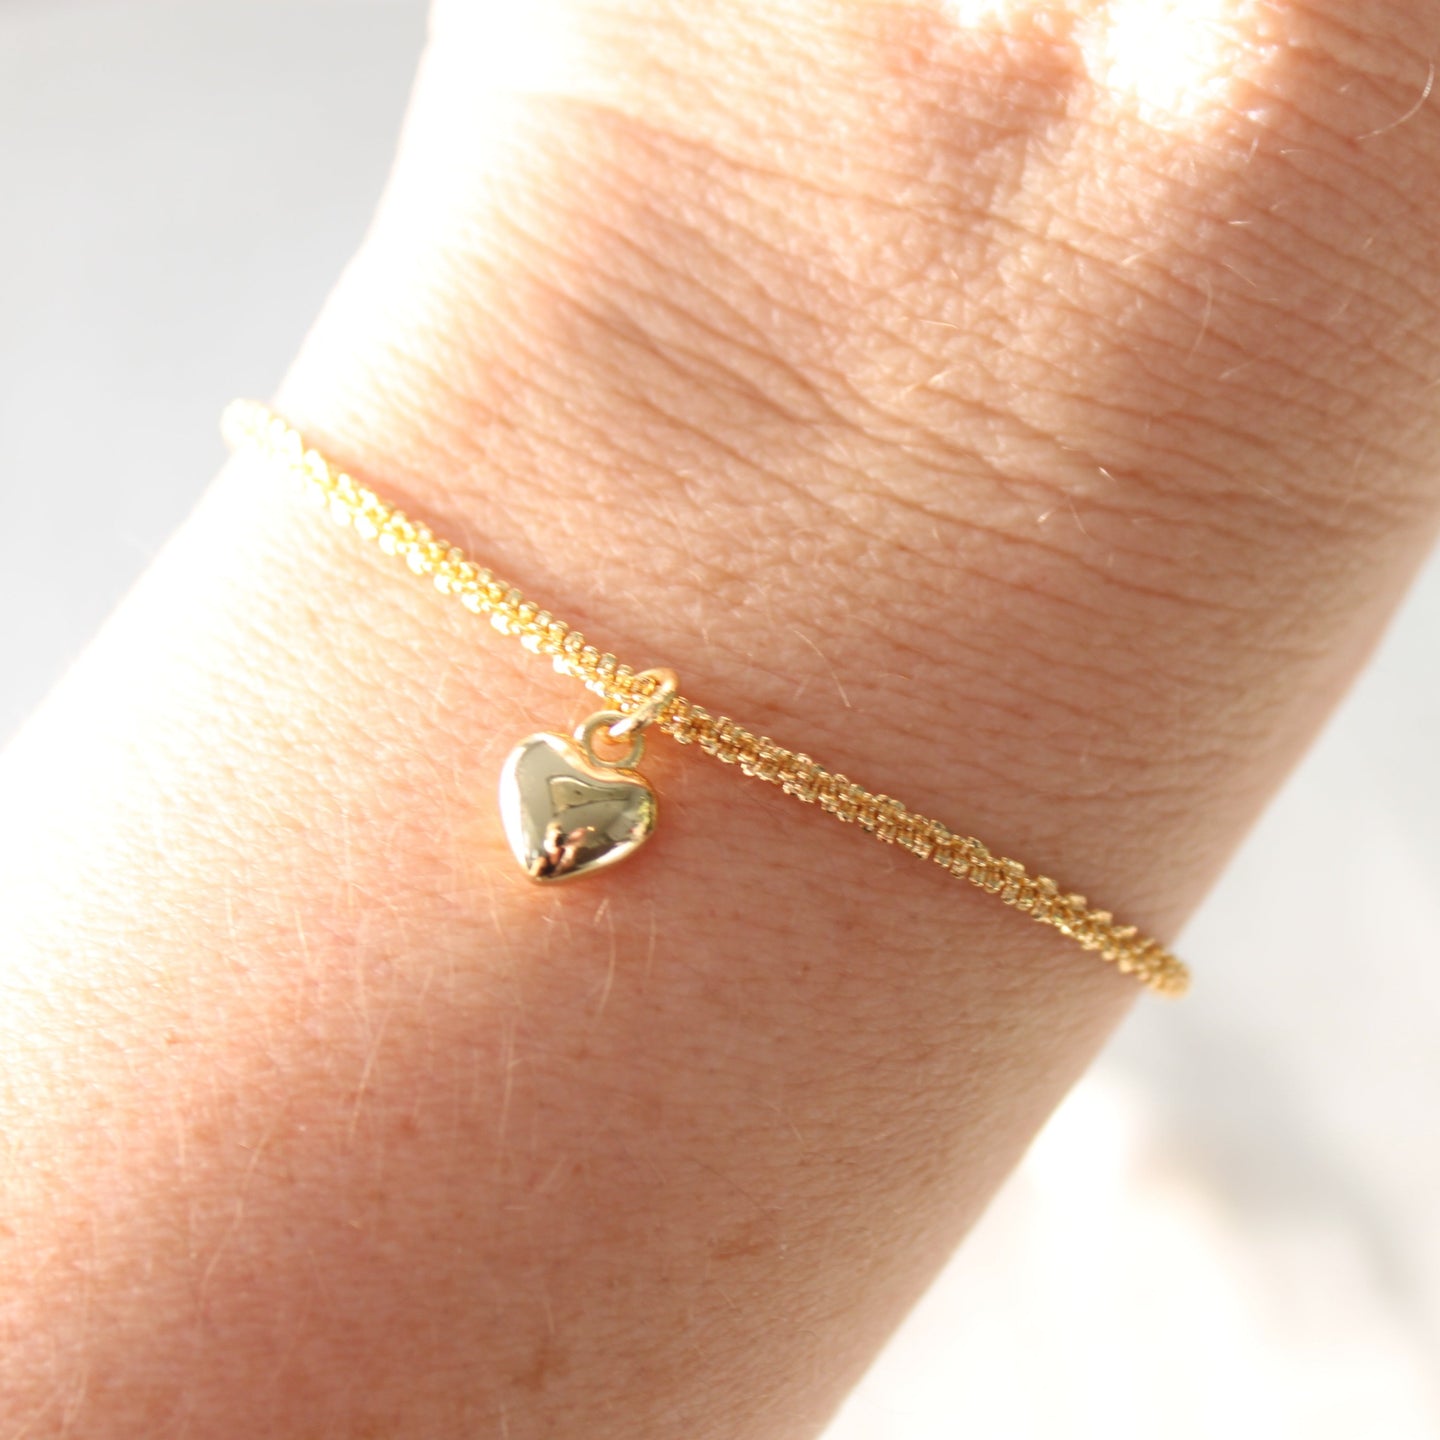 The Love Heart Bracelet - Elisa Maree Jewelry